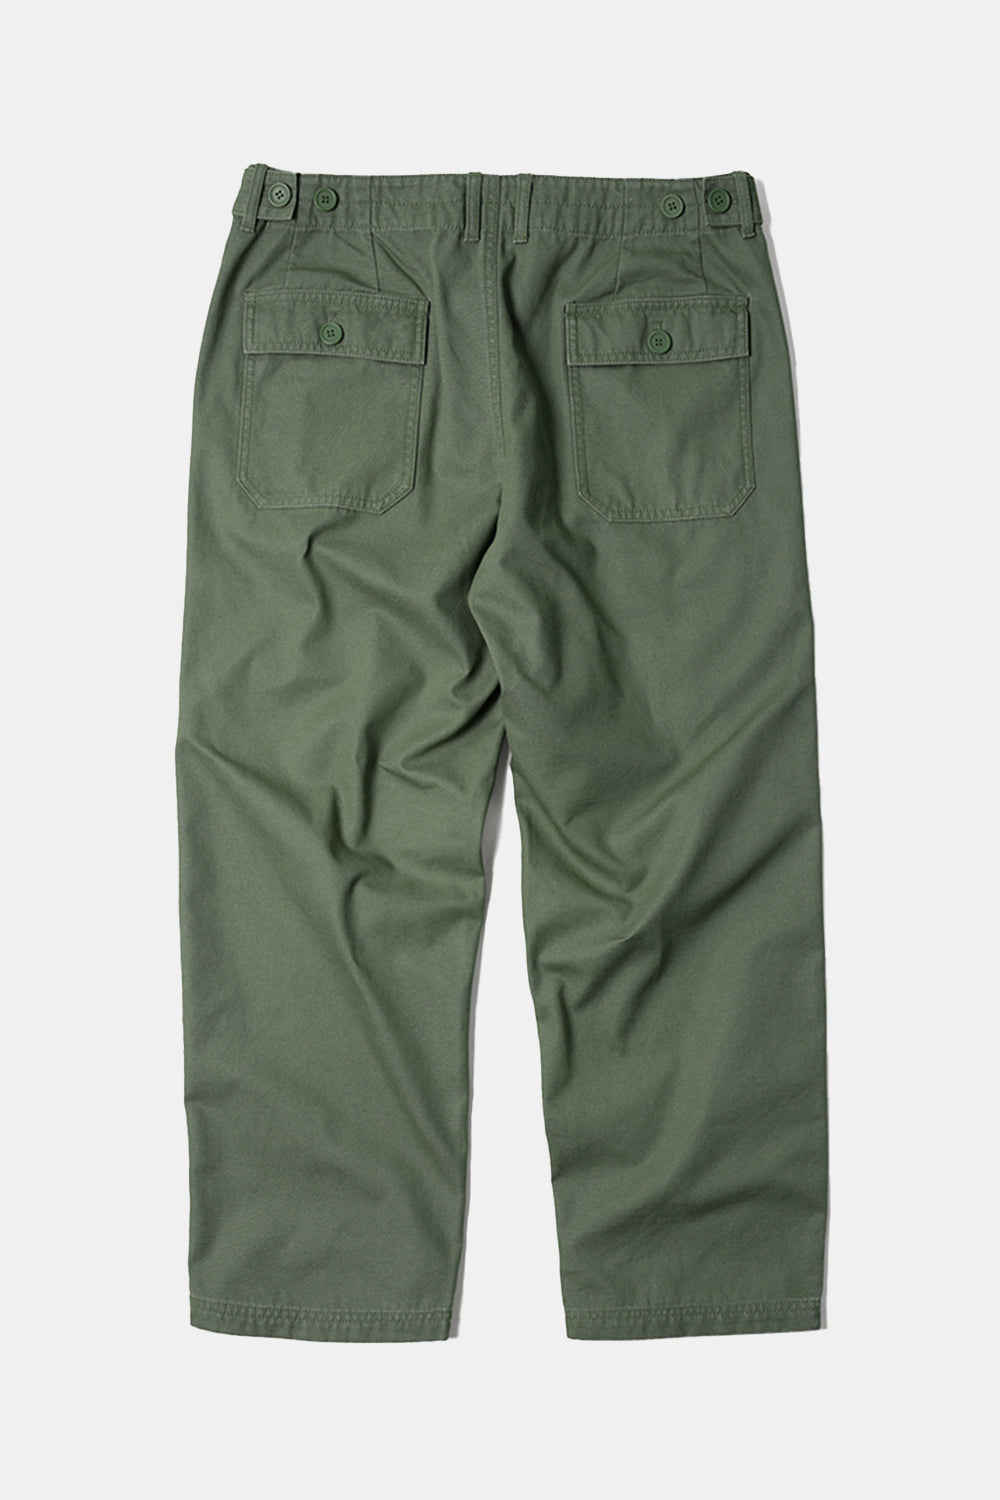 Frizmworks Jungle Cloth Fatigue Pants (Olive)